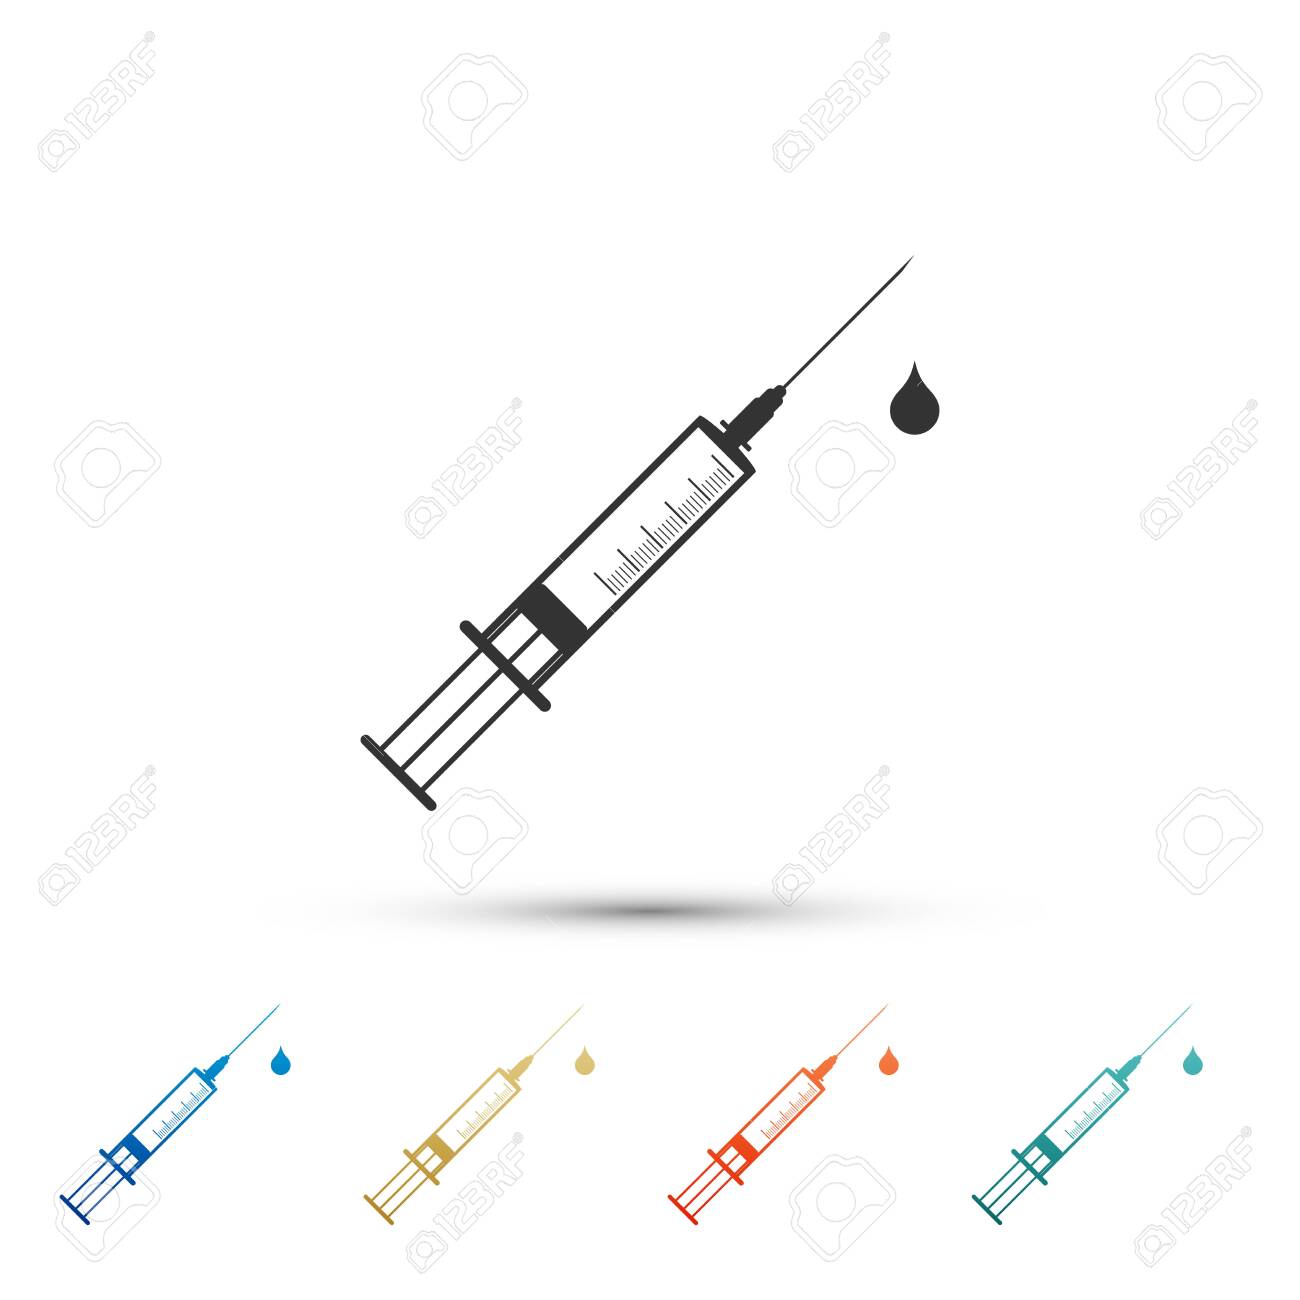 Medical Syringe With Needle And Drop Icon Isolated On White